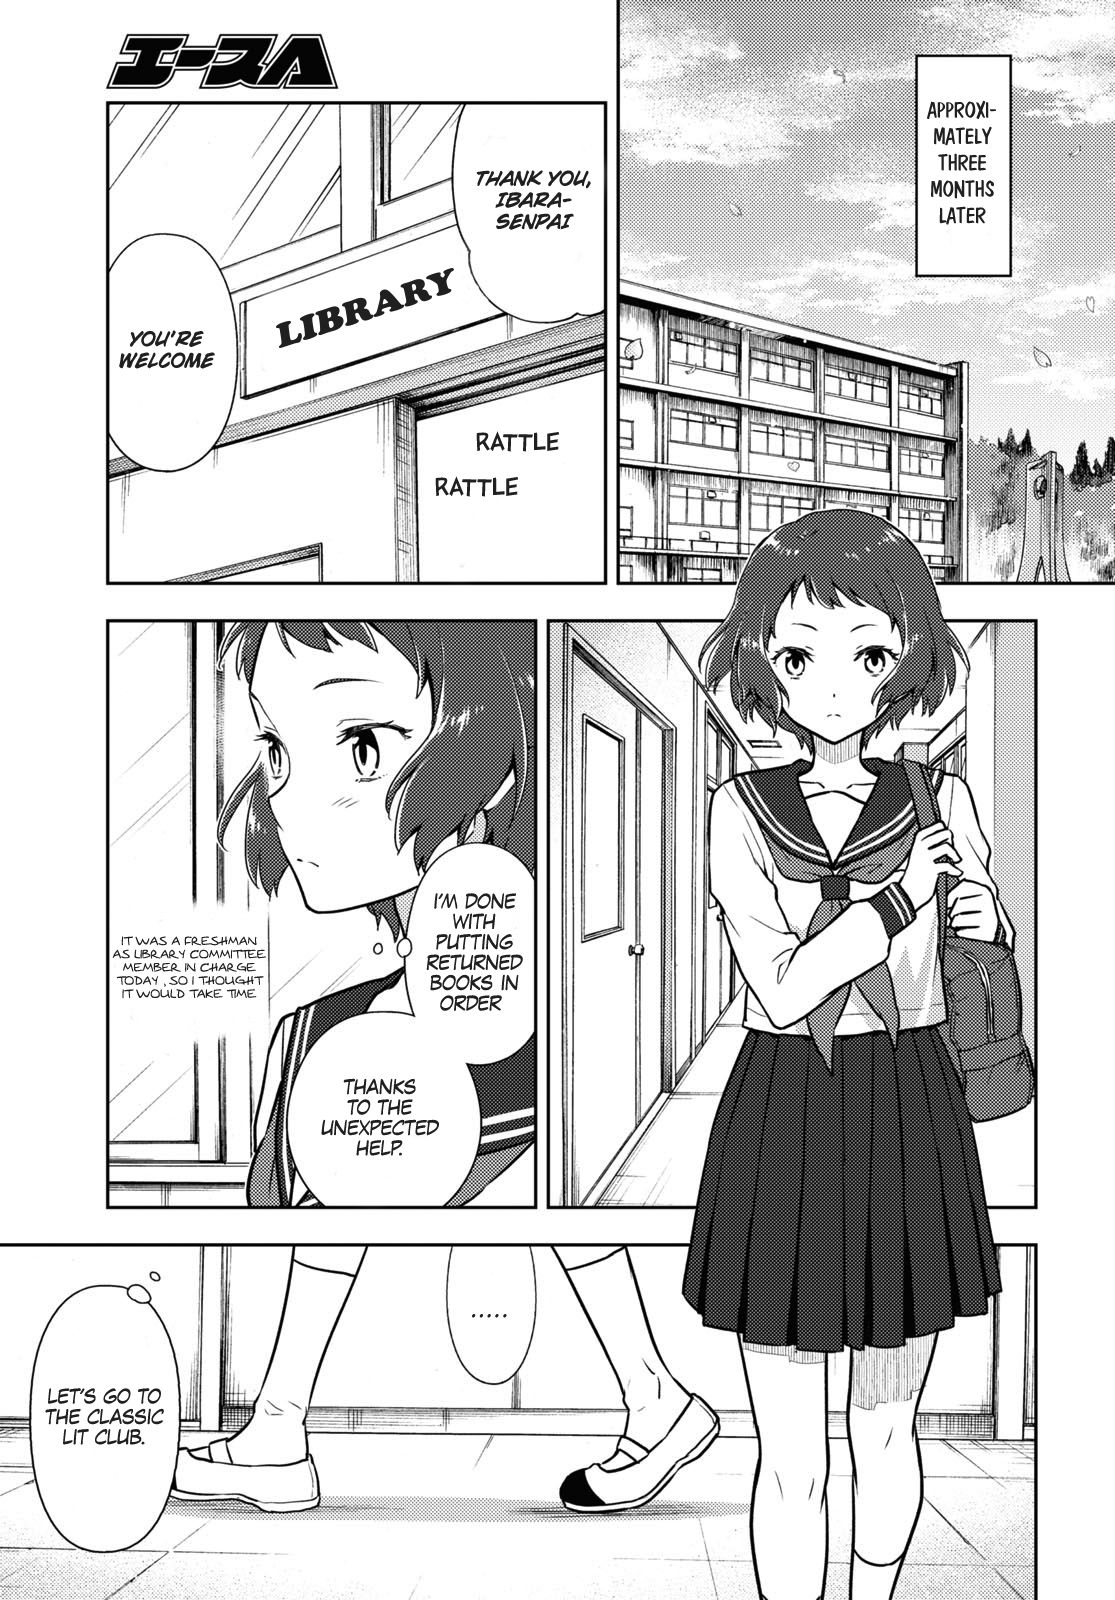 Hyouka chapter 90 page 5